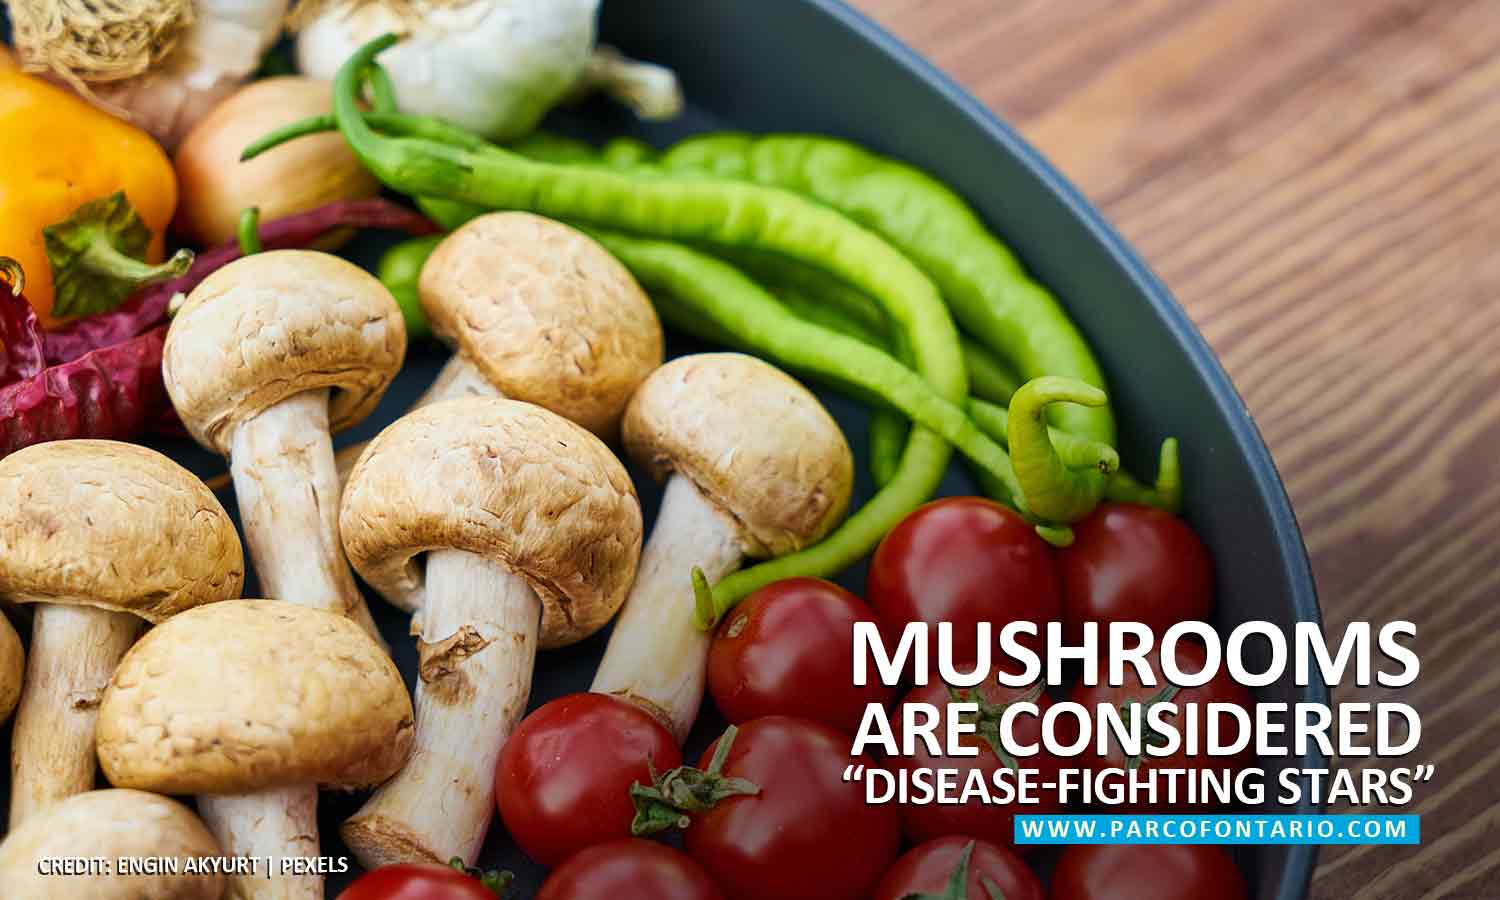 Mushrooms are considered disease-fighting stars